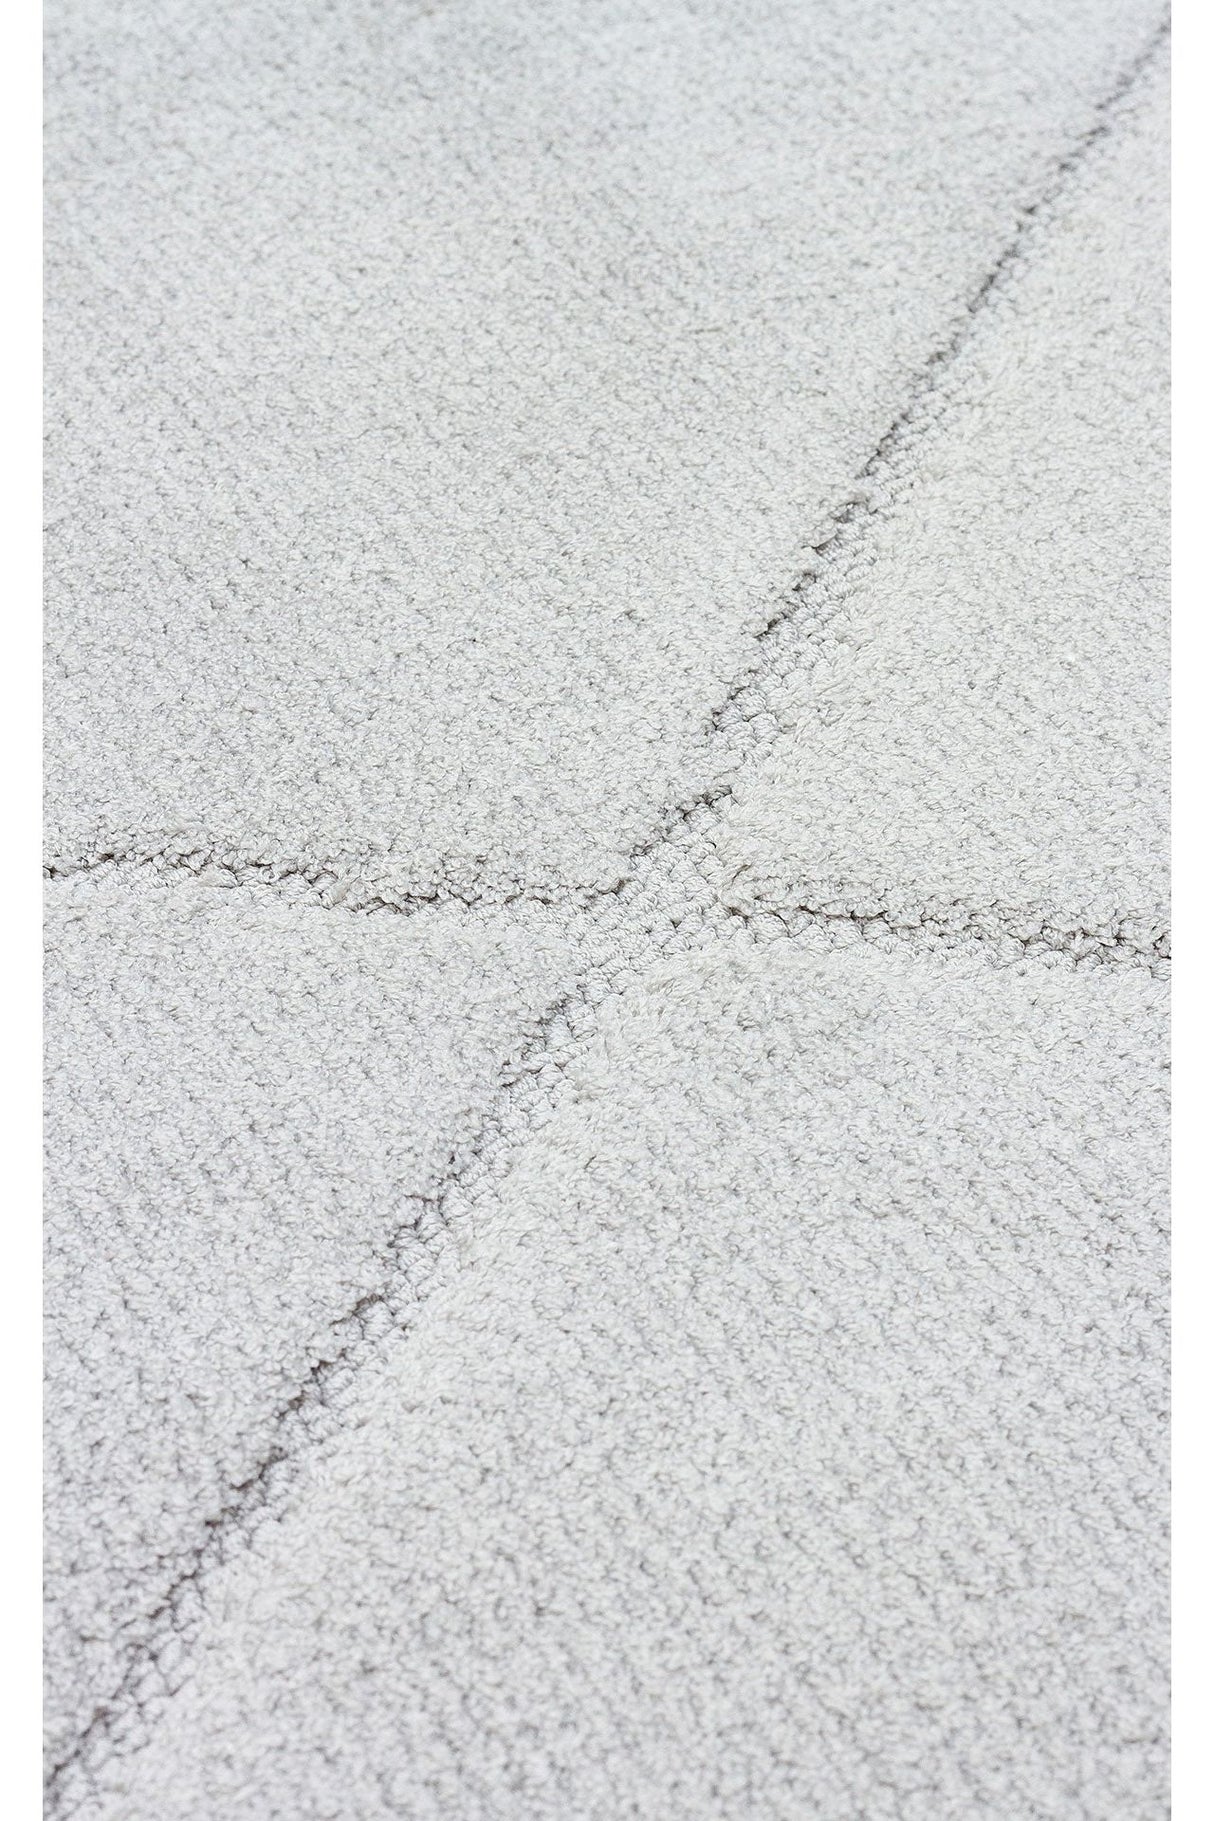 #Turkish_Carpets_Rugs# #Modern_Carpets# #Abrash_Carpets#Msr 03 Grey